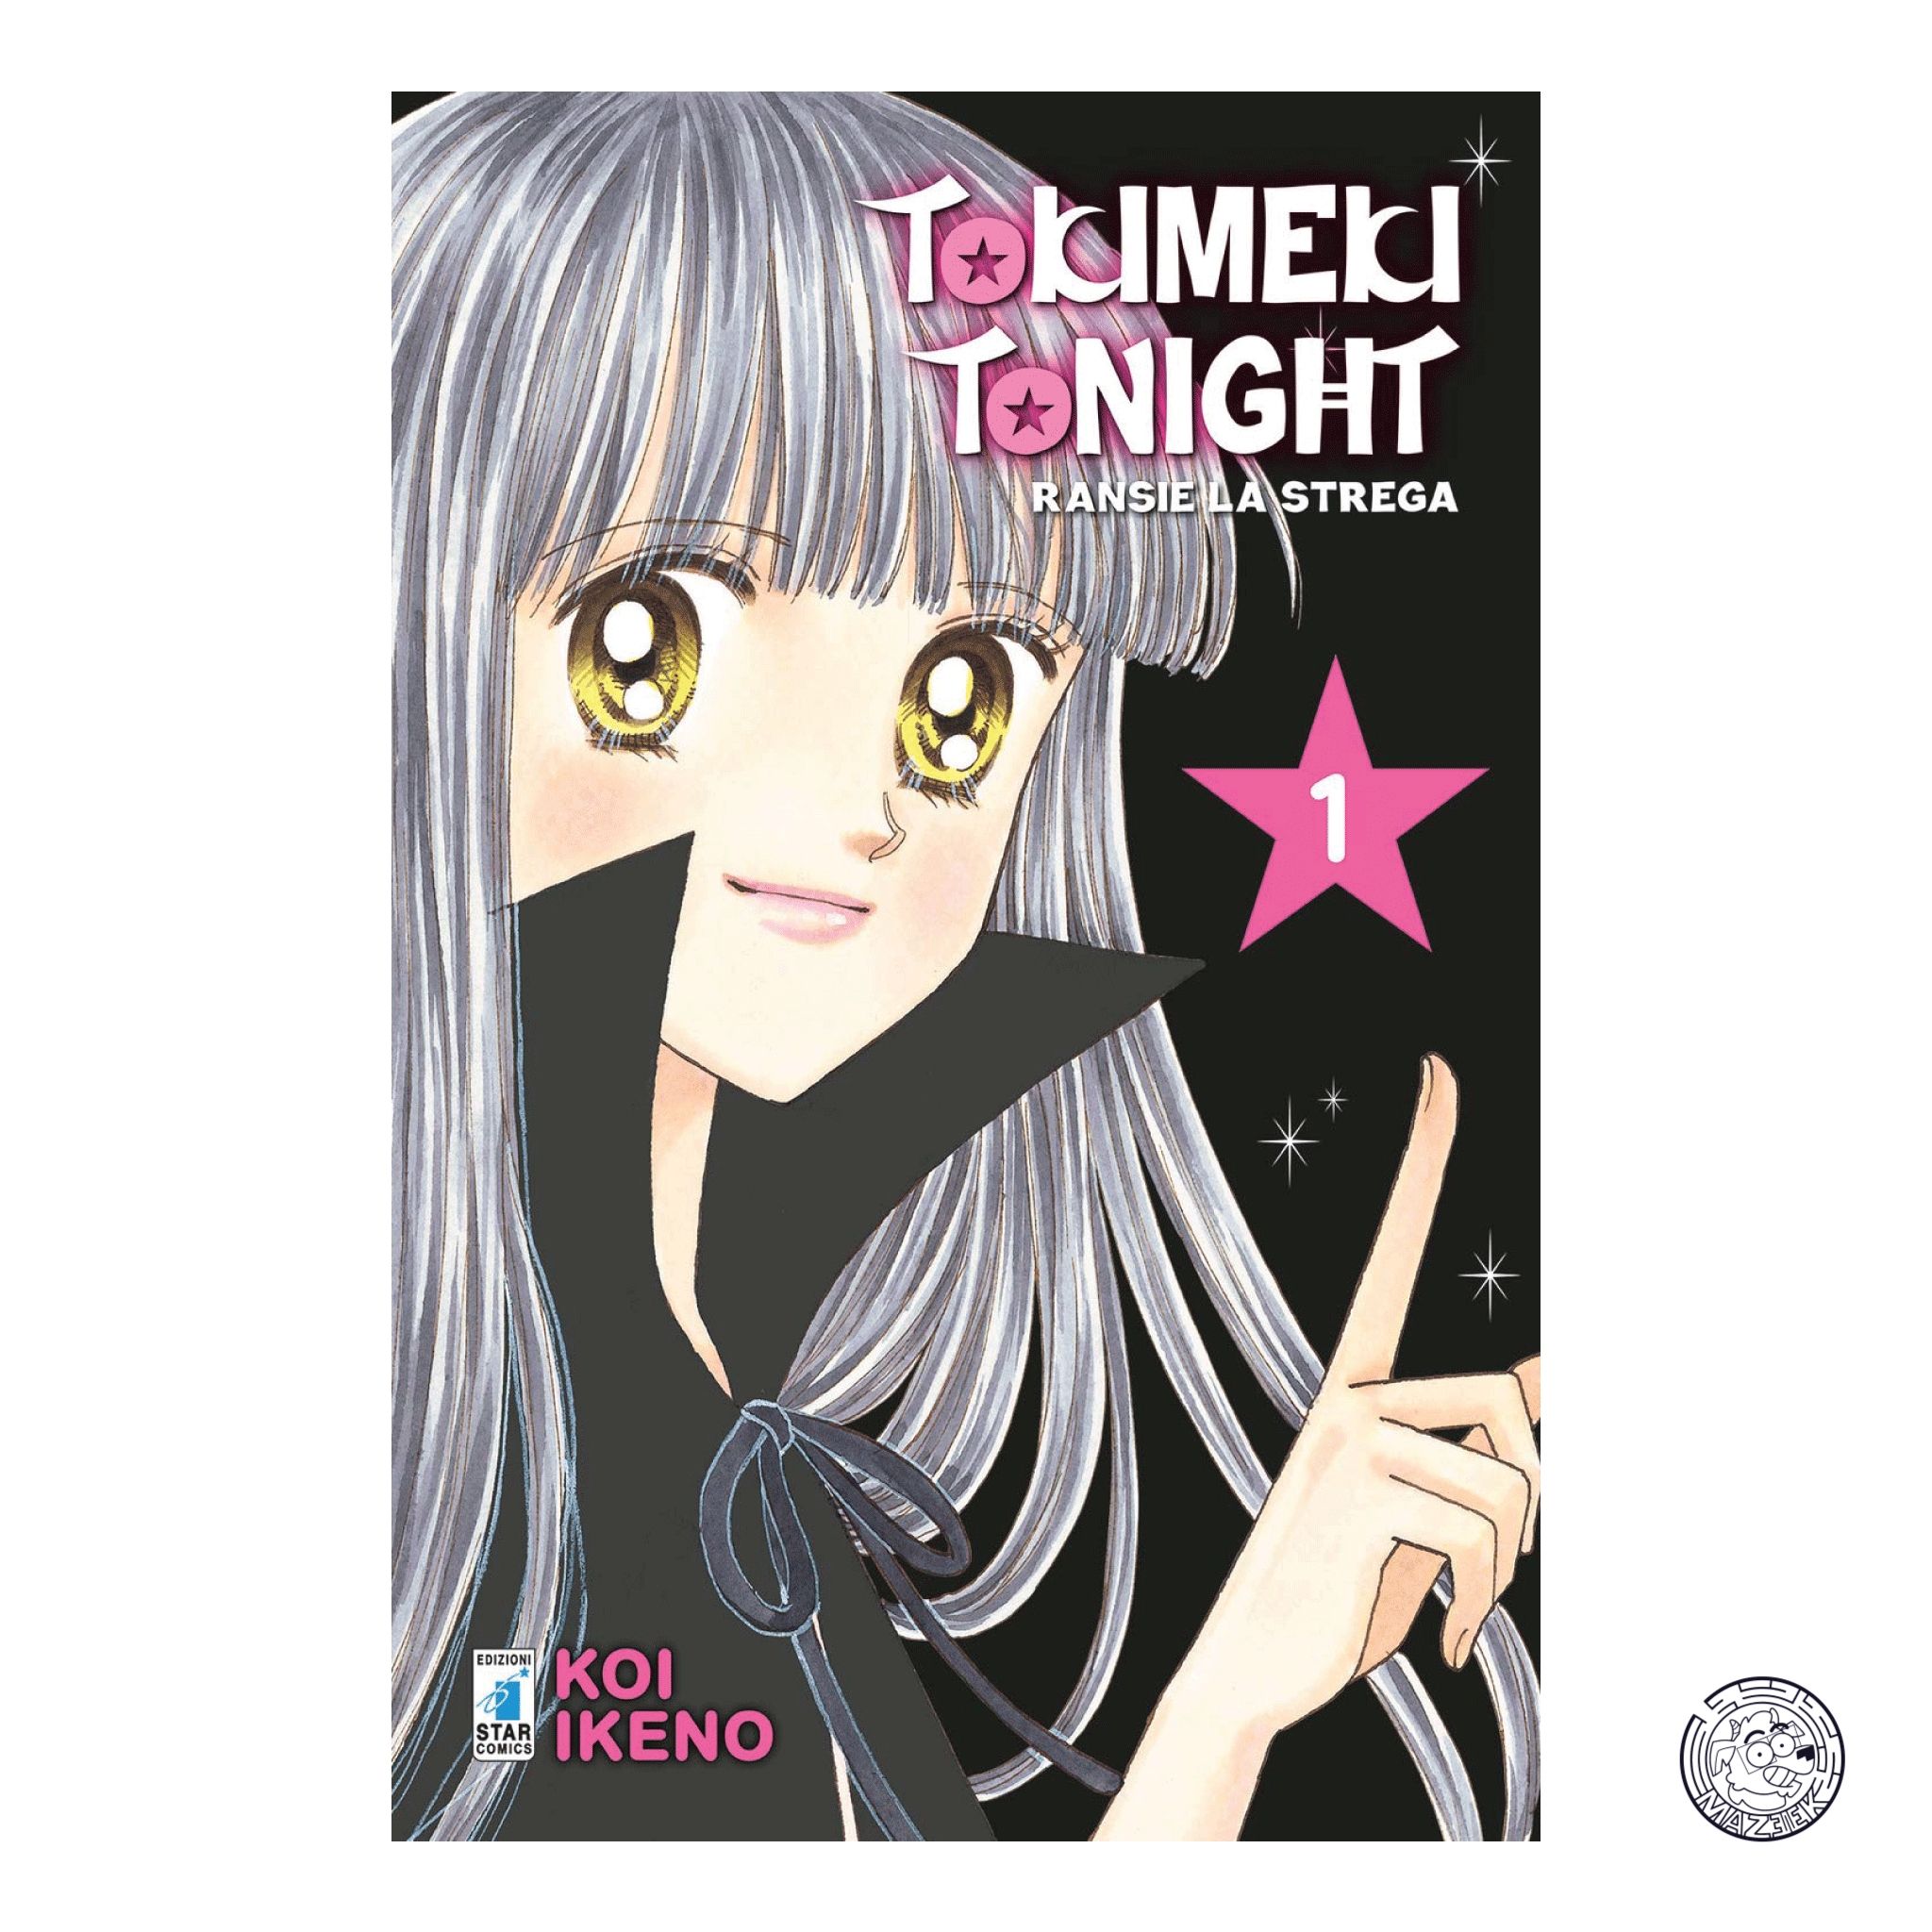 Tokimeki Tonight - Ransie the Witch 01